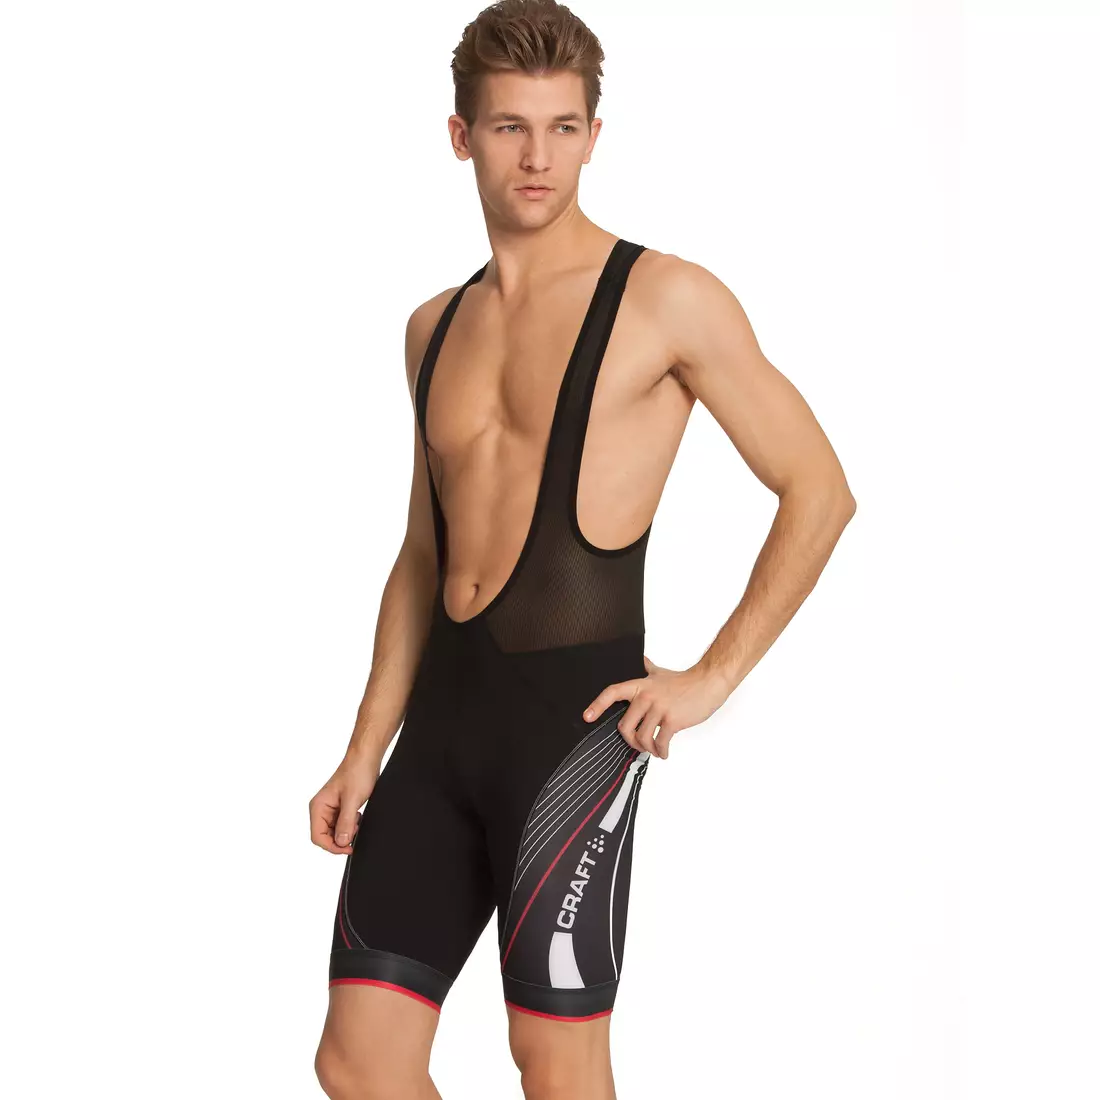 CRAFT Performance Bike Grand Tour men's cycling shorts 1902616-9430